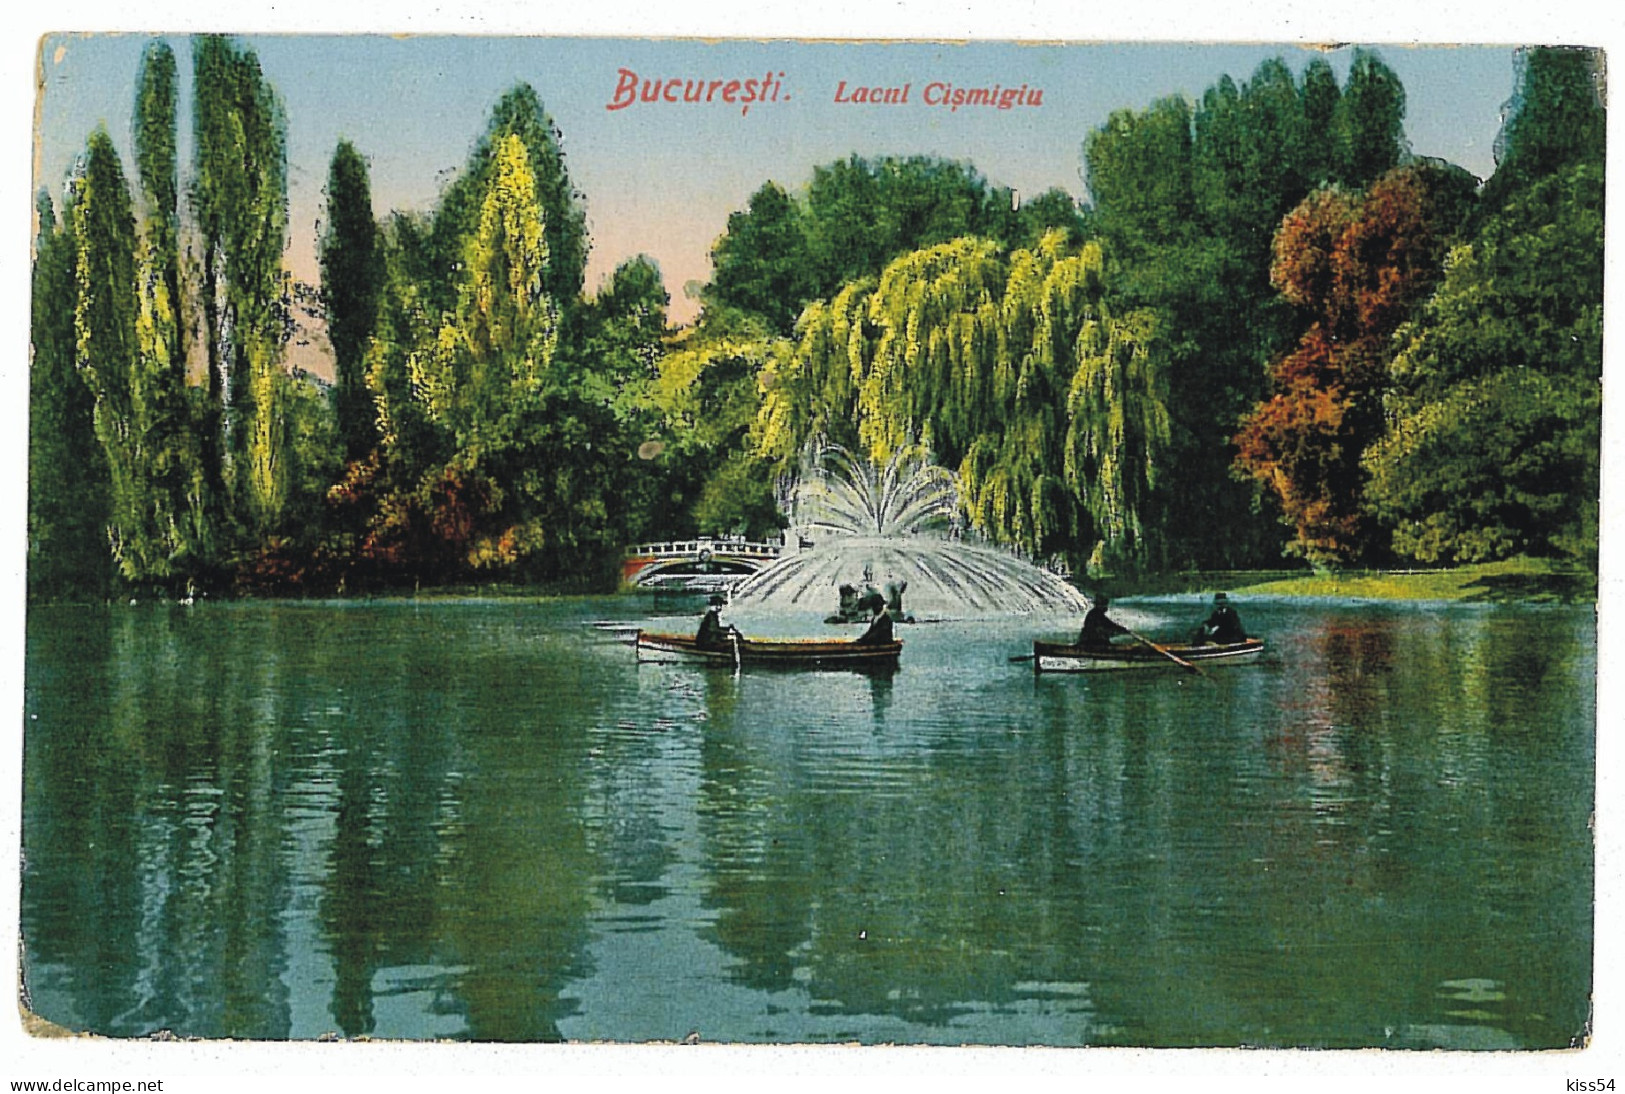 RO 52 - 1731 BUCURESTI, Lake Cismigiu, Romania - Old Postcard - Used - 1931 - Rumänien